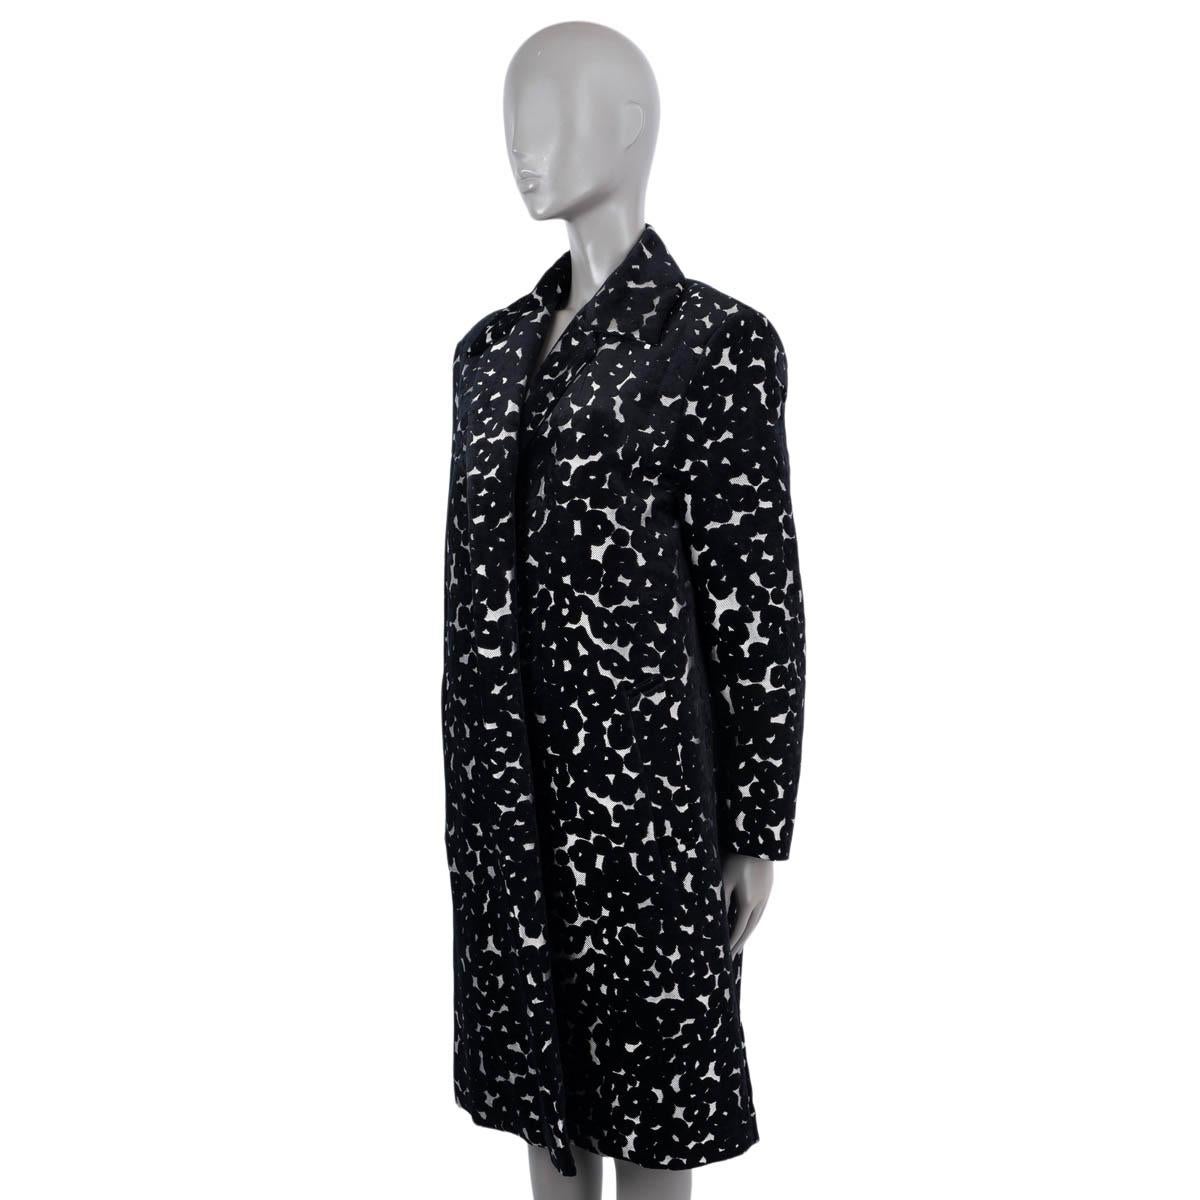 DRIES VAN NOTEN black & white FLORAL JACQUARD OPEN Coat Jacket 40 M In Excellent Condition For Sale In Zürich, CH